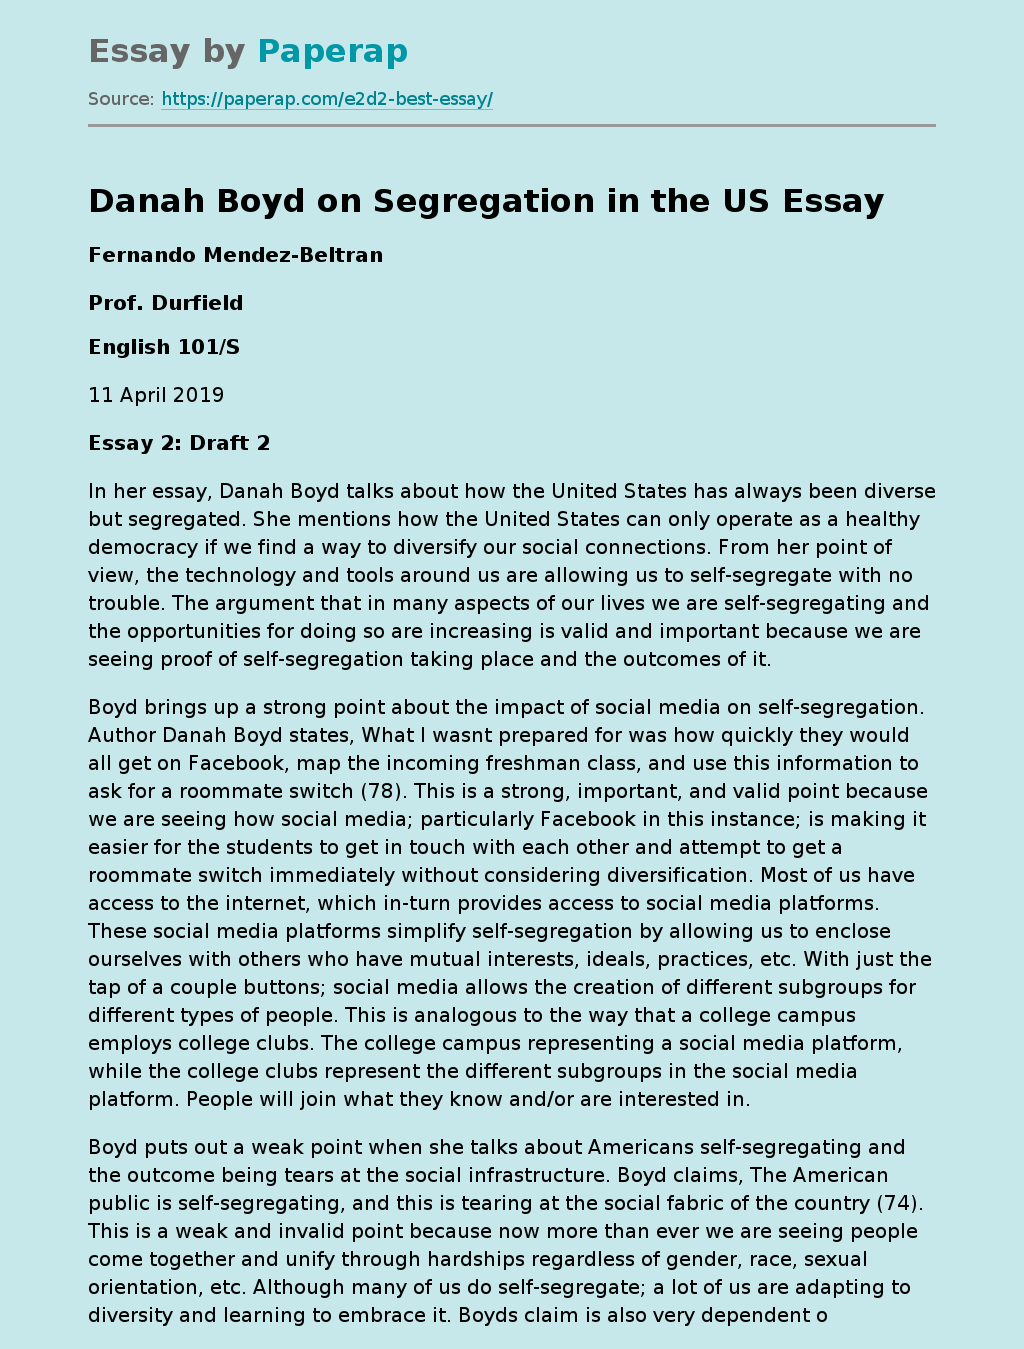 Danah Boyd on Segregation in the US